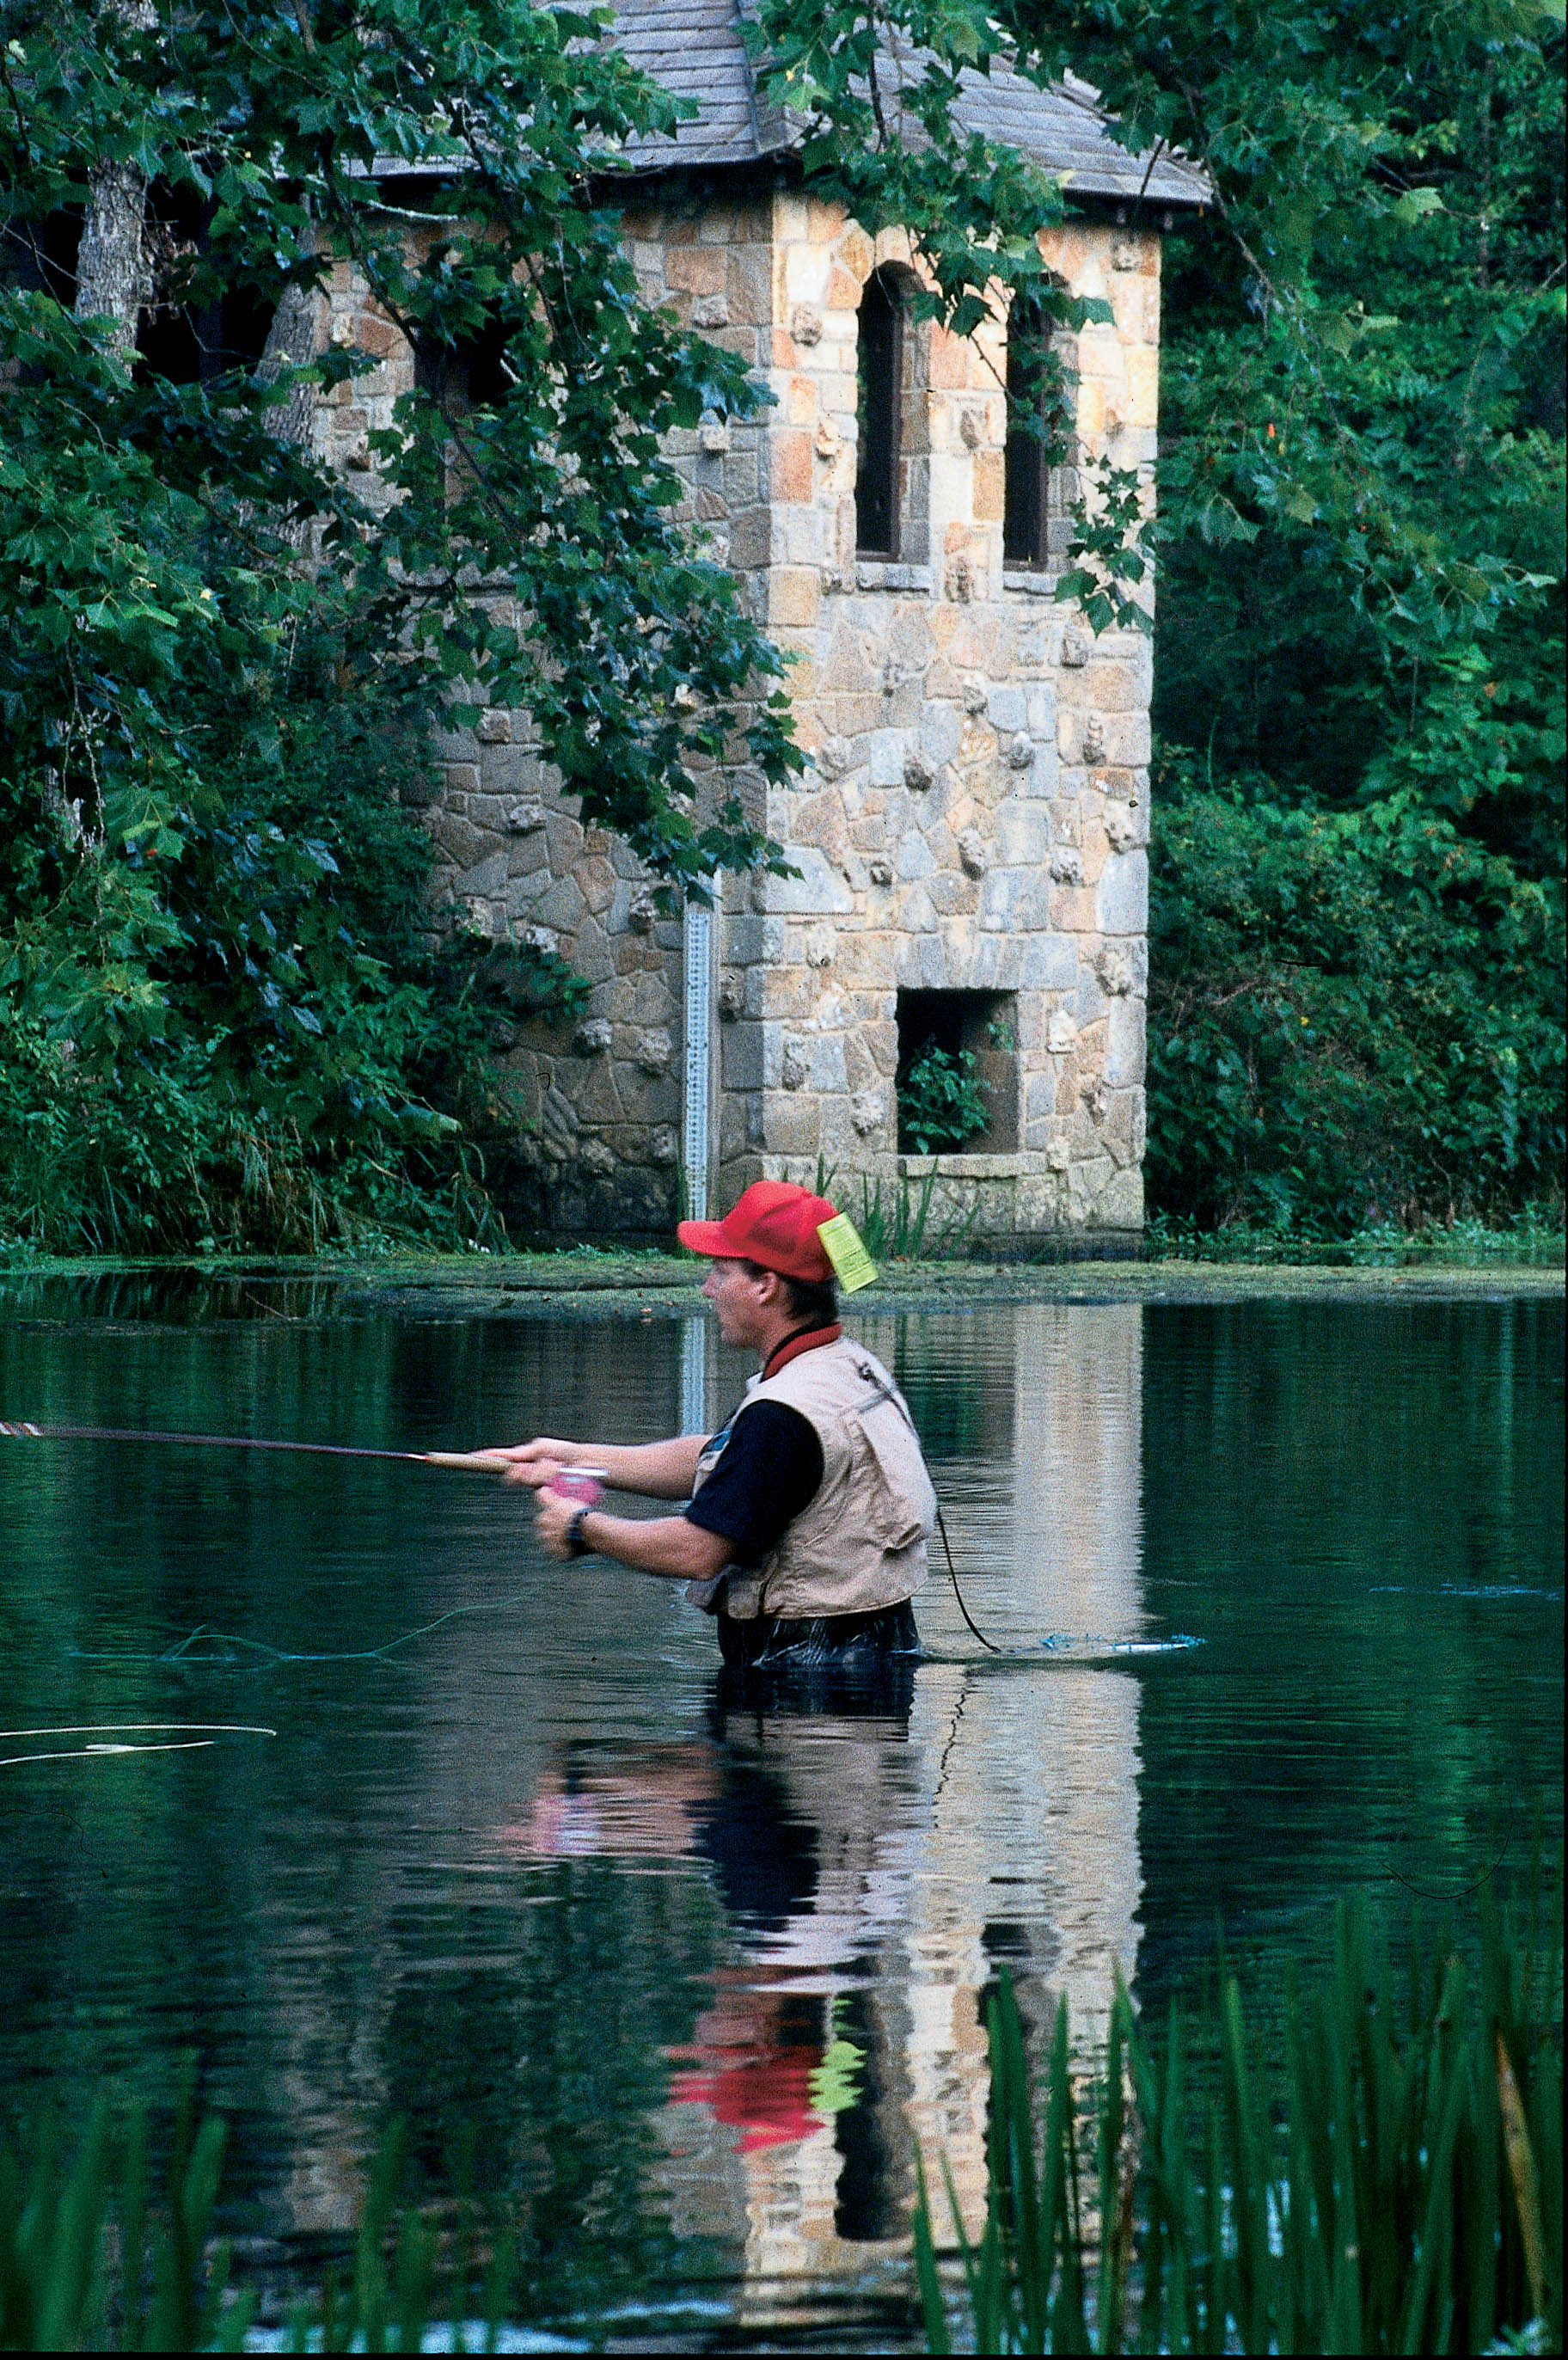 Man trout fishing